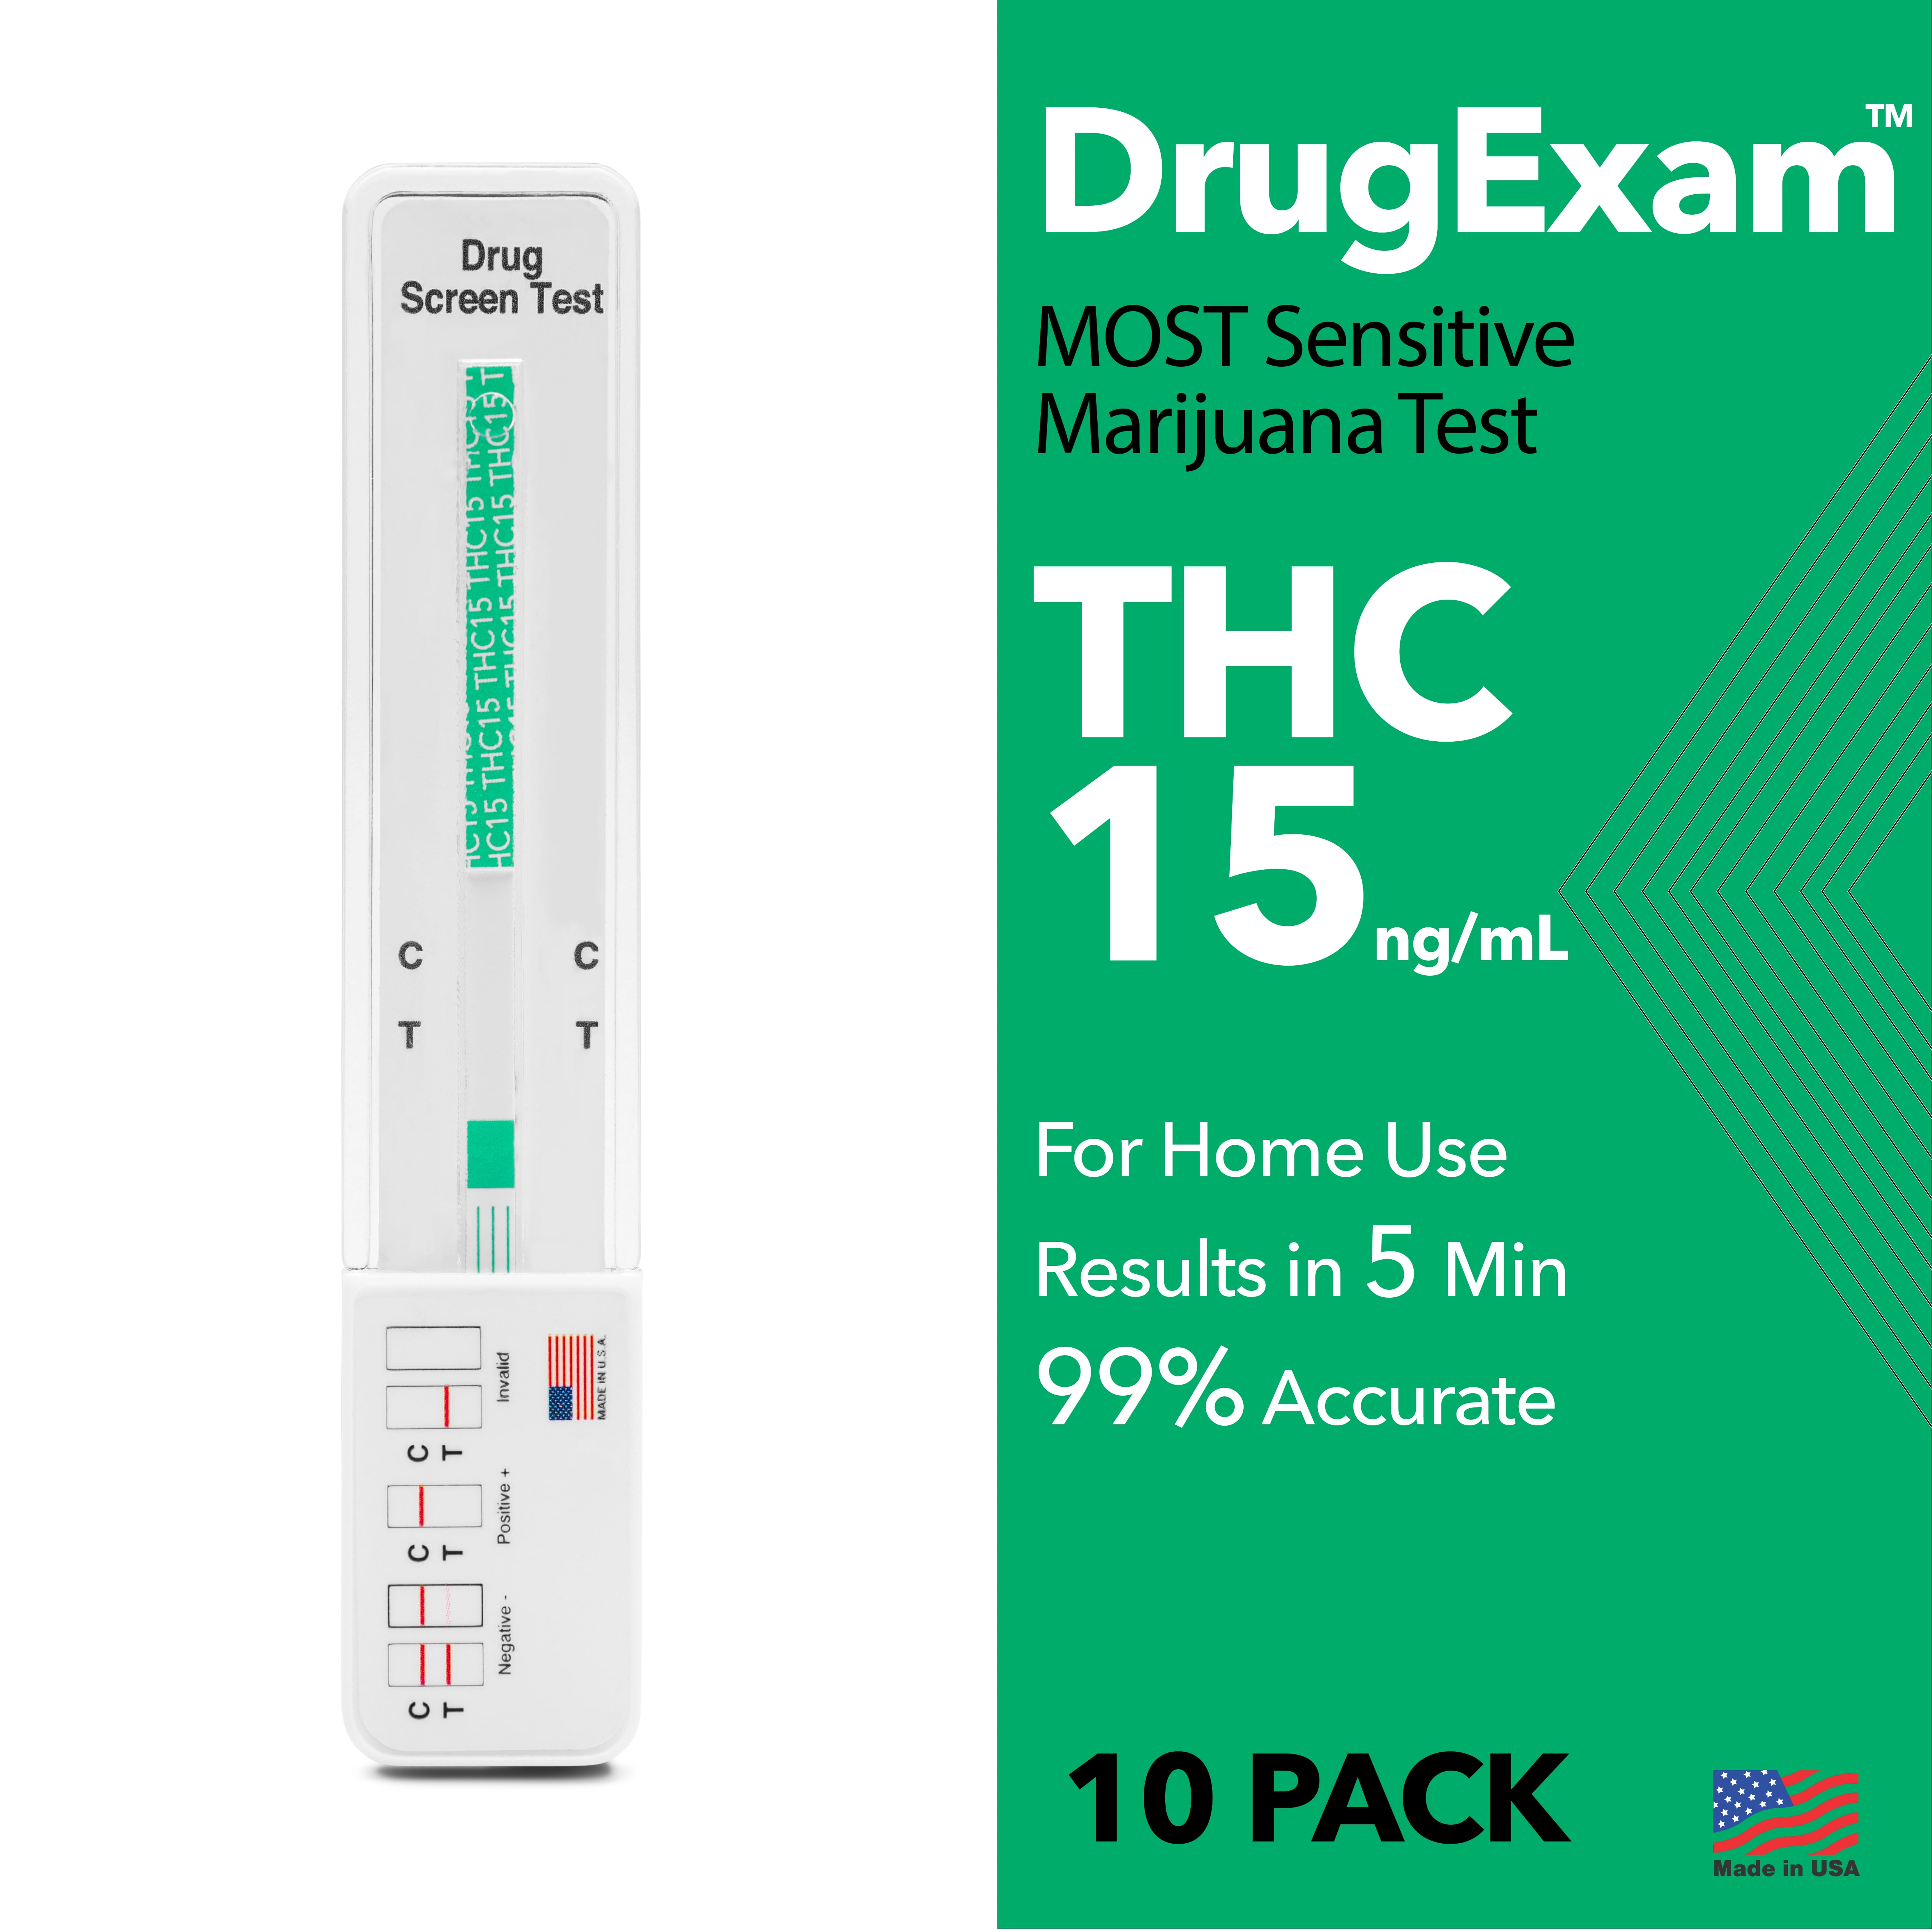 10 Pack - DrugExam Made in USA Most Sensitive Marijuana THC 15 ng/mL Single  Panel Drug Test Kit - Marijuana Drug Test with 15 ng/mL Cutoff Level for  Detecting Any Form of